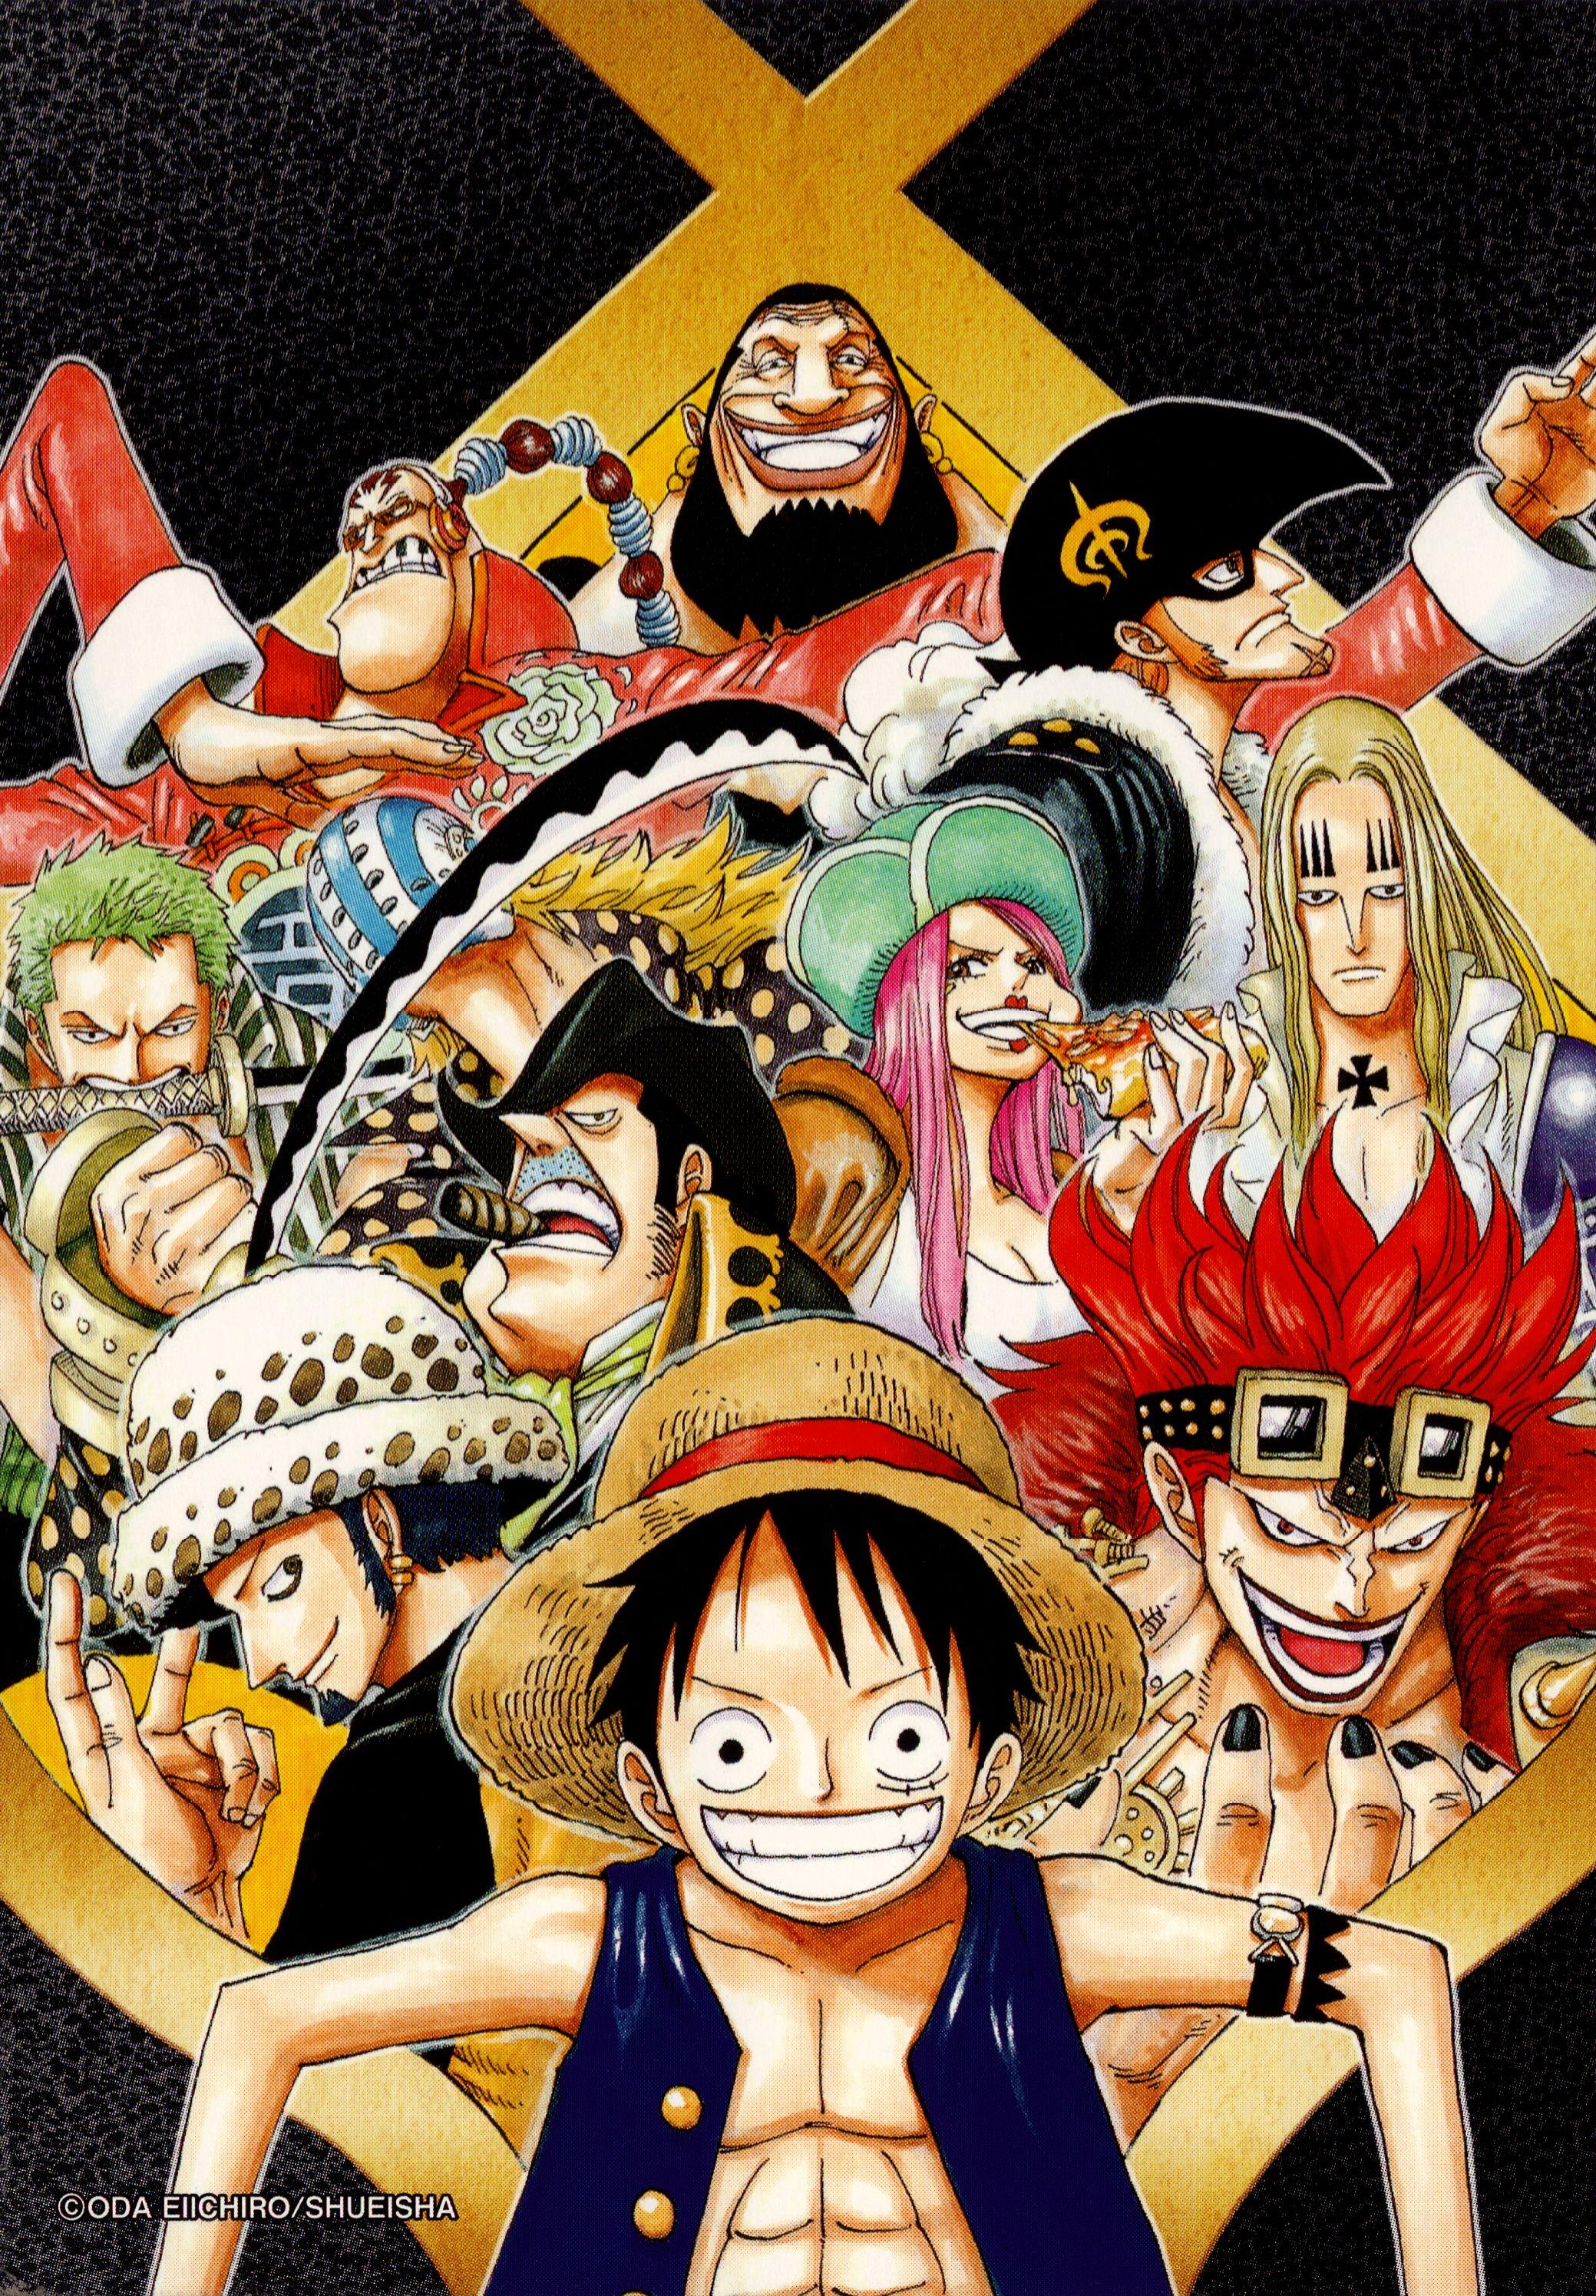 Basil Hawkins Hd Wallpaper 4k Download Full Screen, One Piece wallpaper, Anime